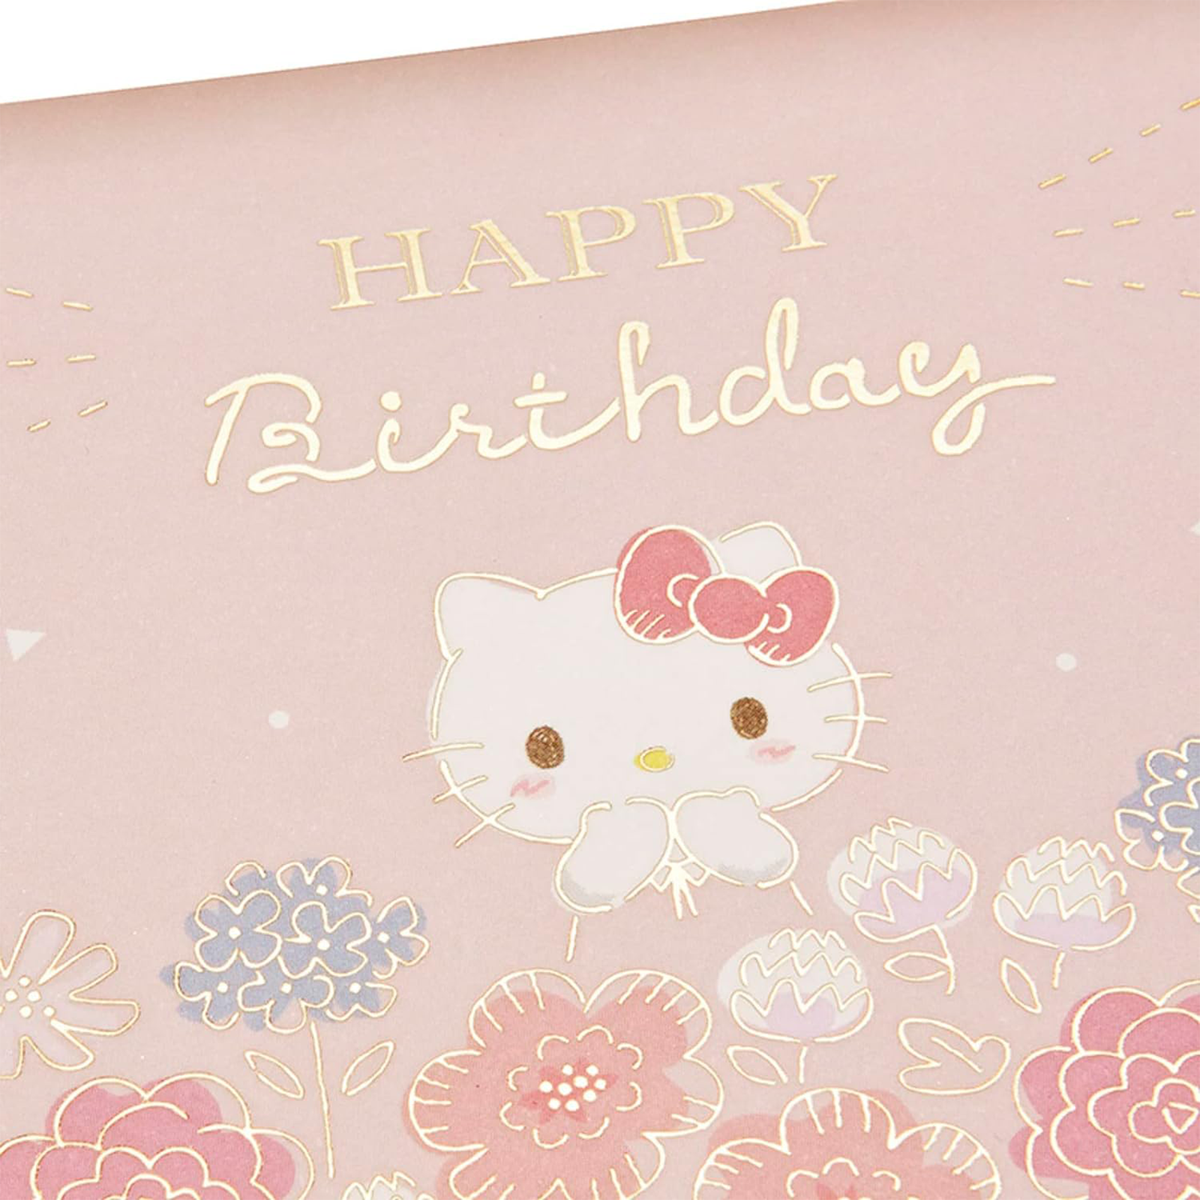 Sanrio Hello Kitty Postcard 3d Pop Up Greeting Cards Wedding